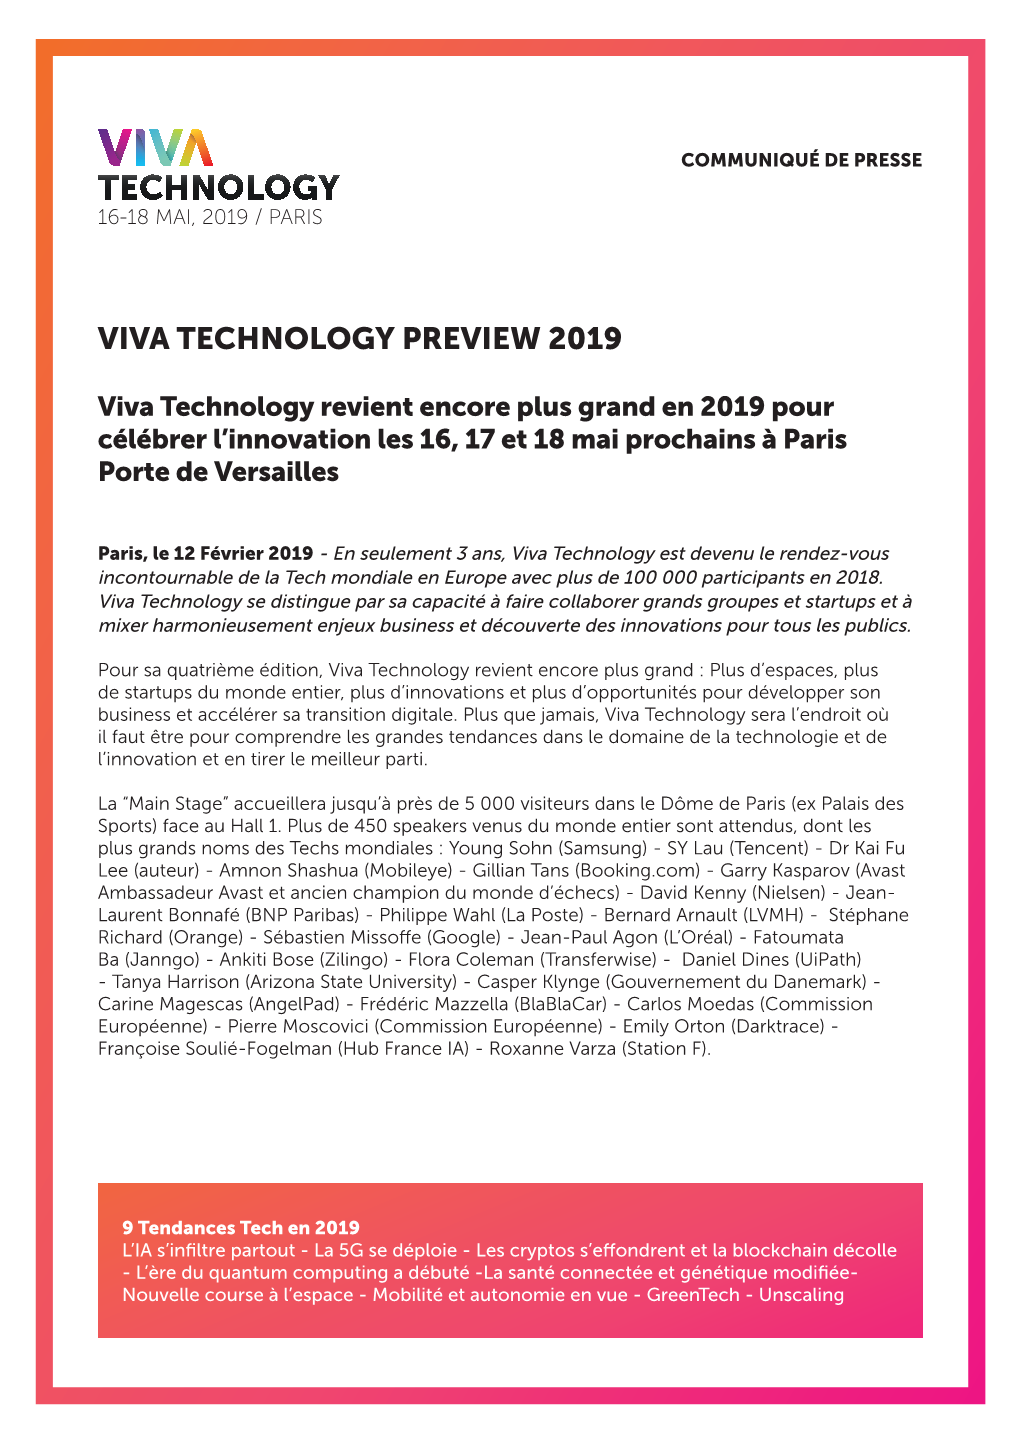 Viva Technology Preview 2019